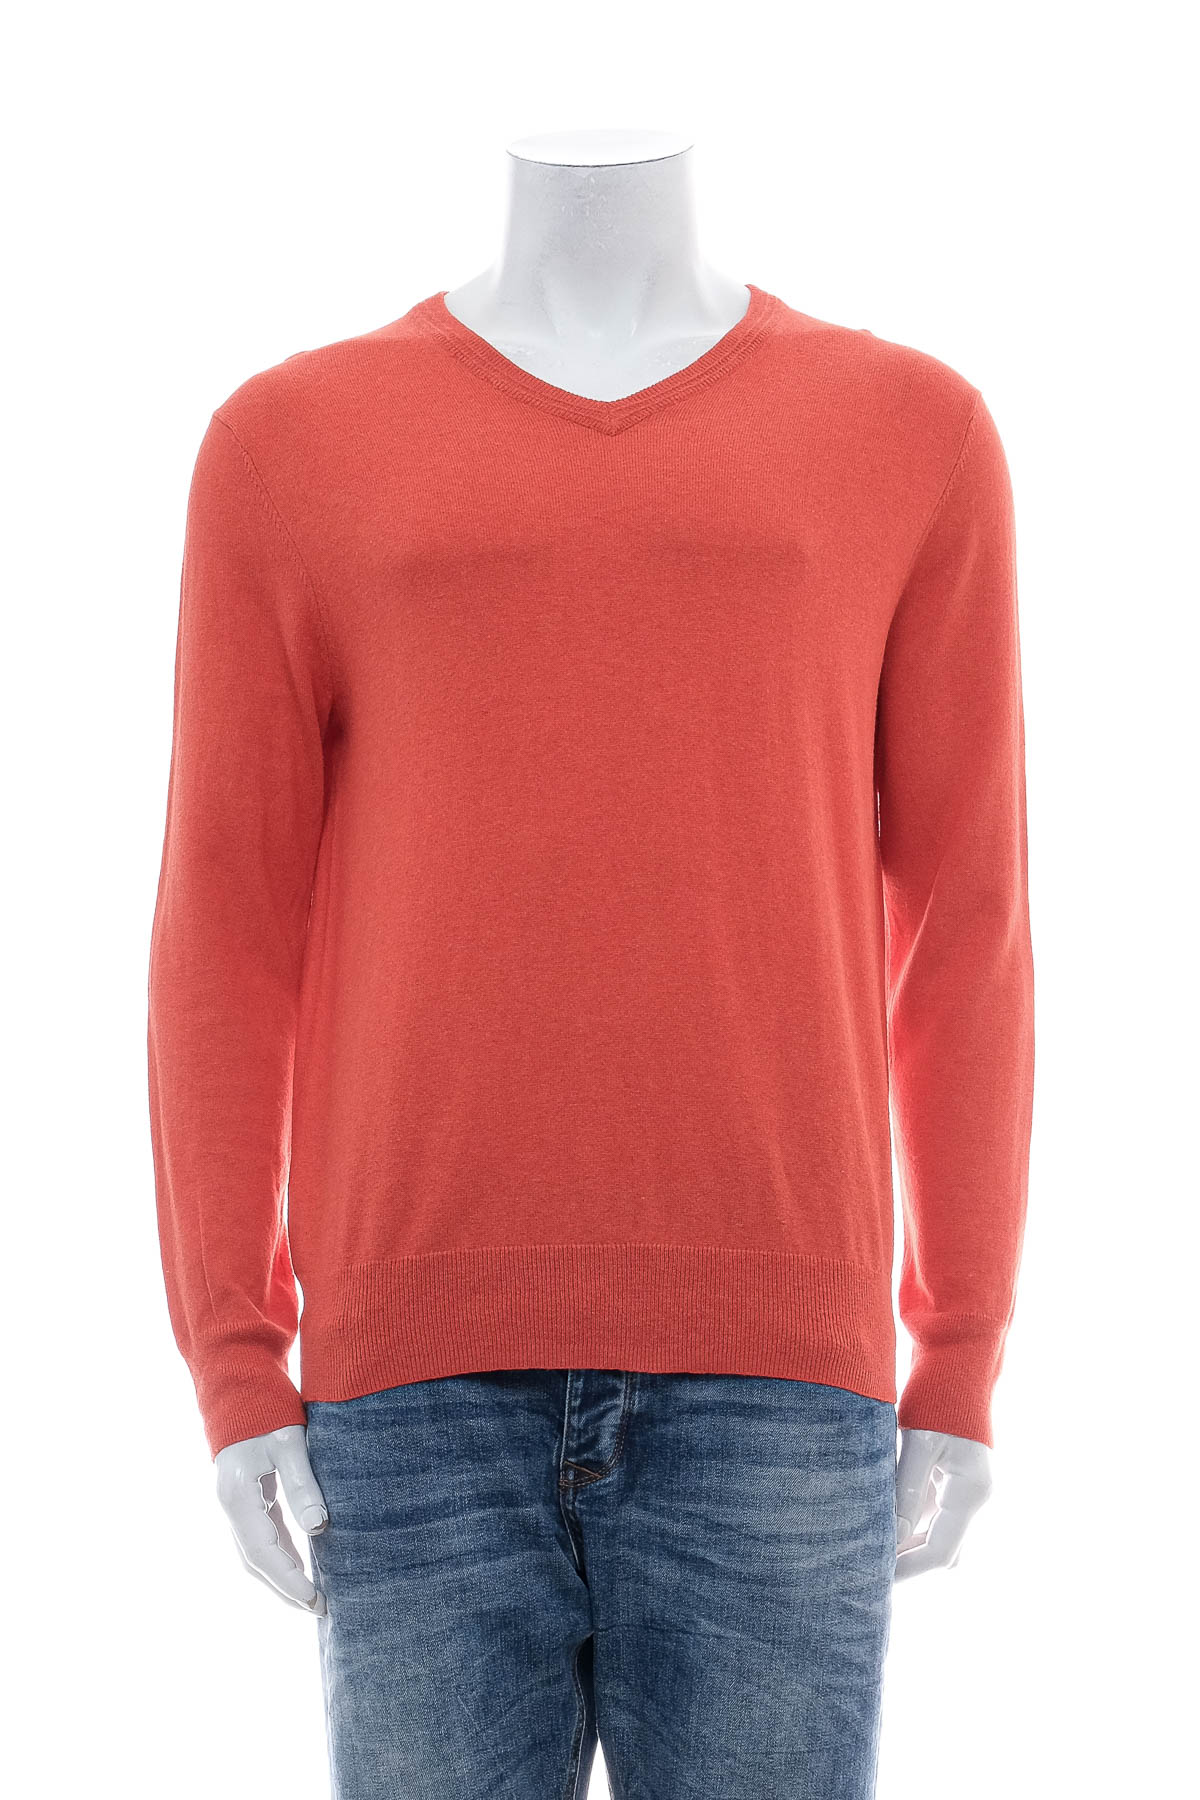 Men's sweater - GAP - 0